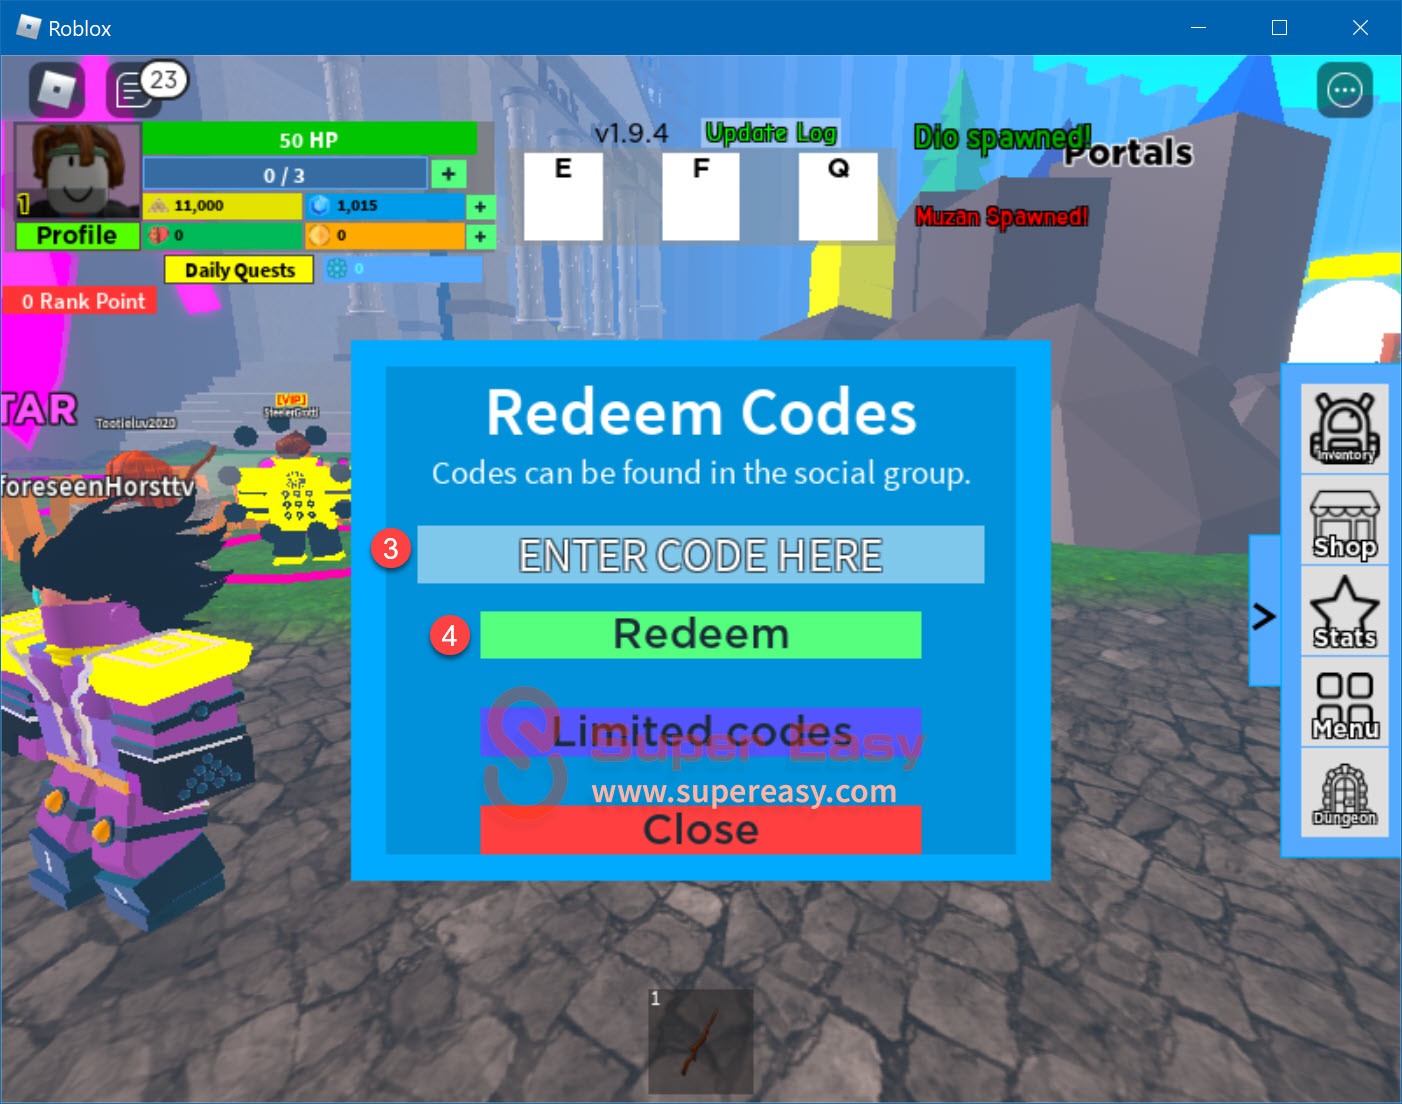 New Legend Rpg 2 Codes Jul 2021 Super Easy - roblox divinity rpg codes